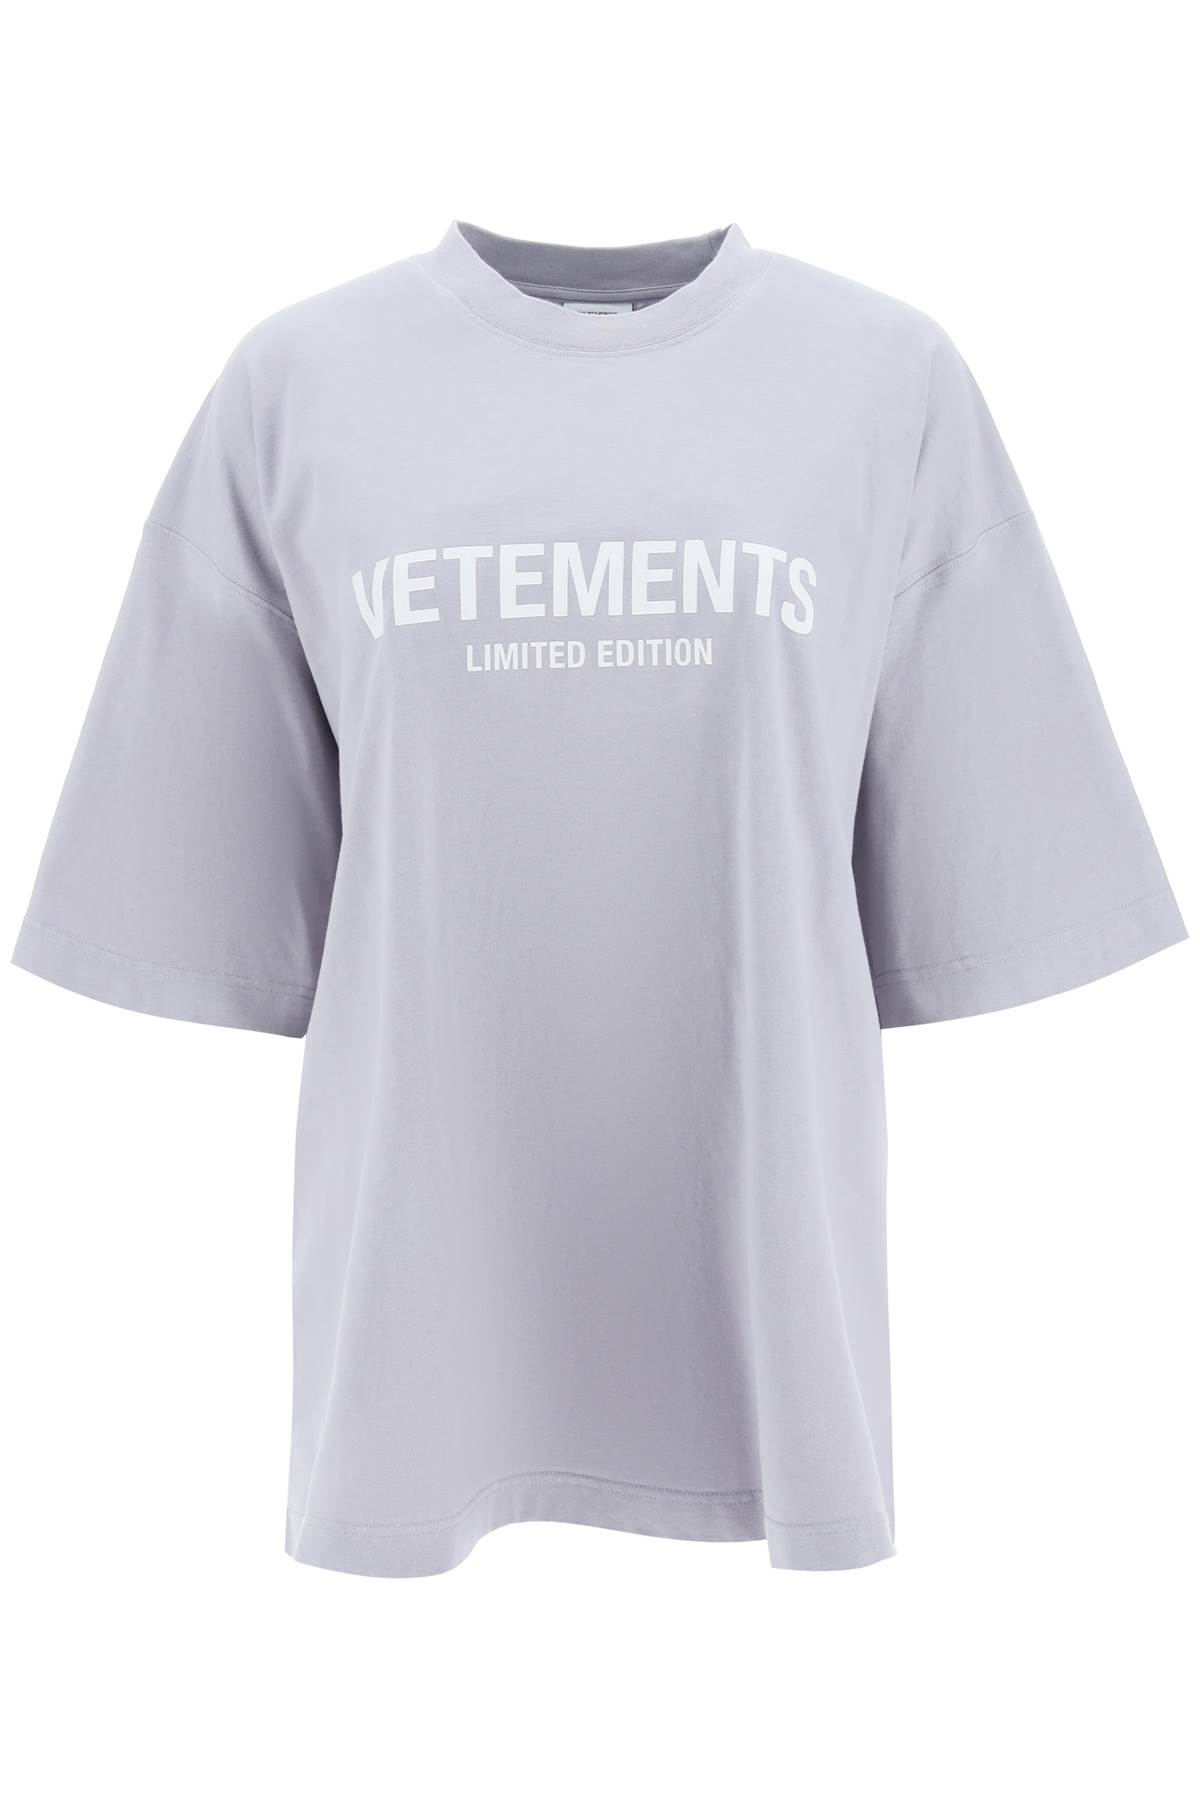 VETEMENTS Oversized Limited Edition Logo T-shirt